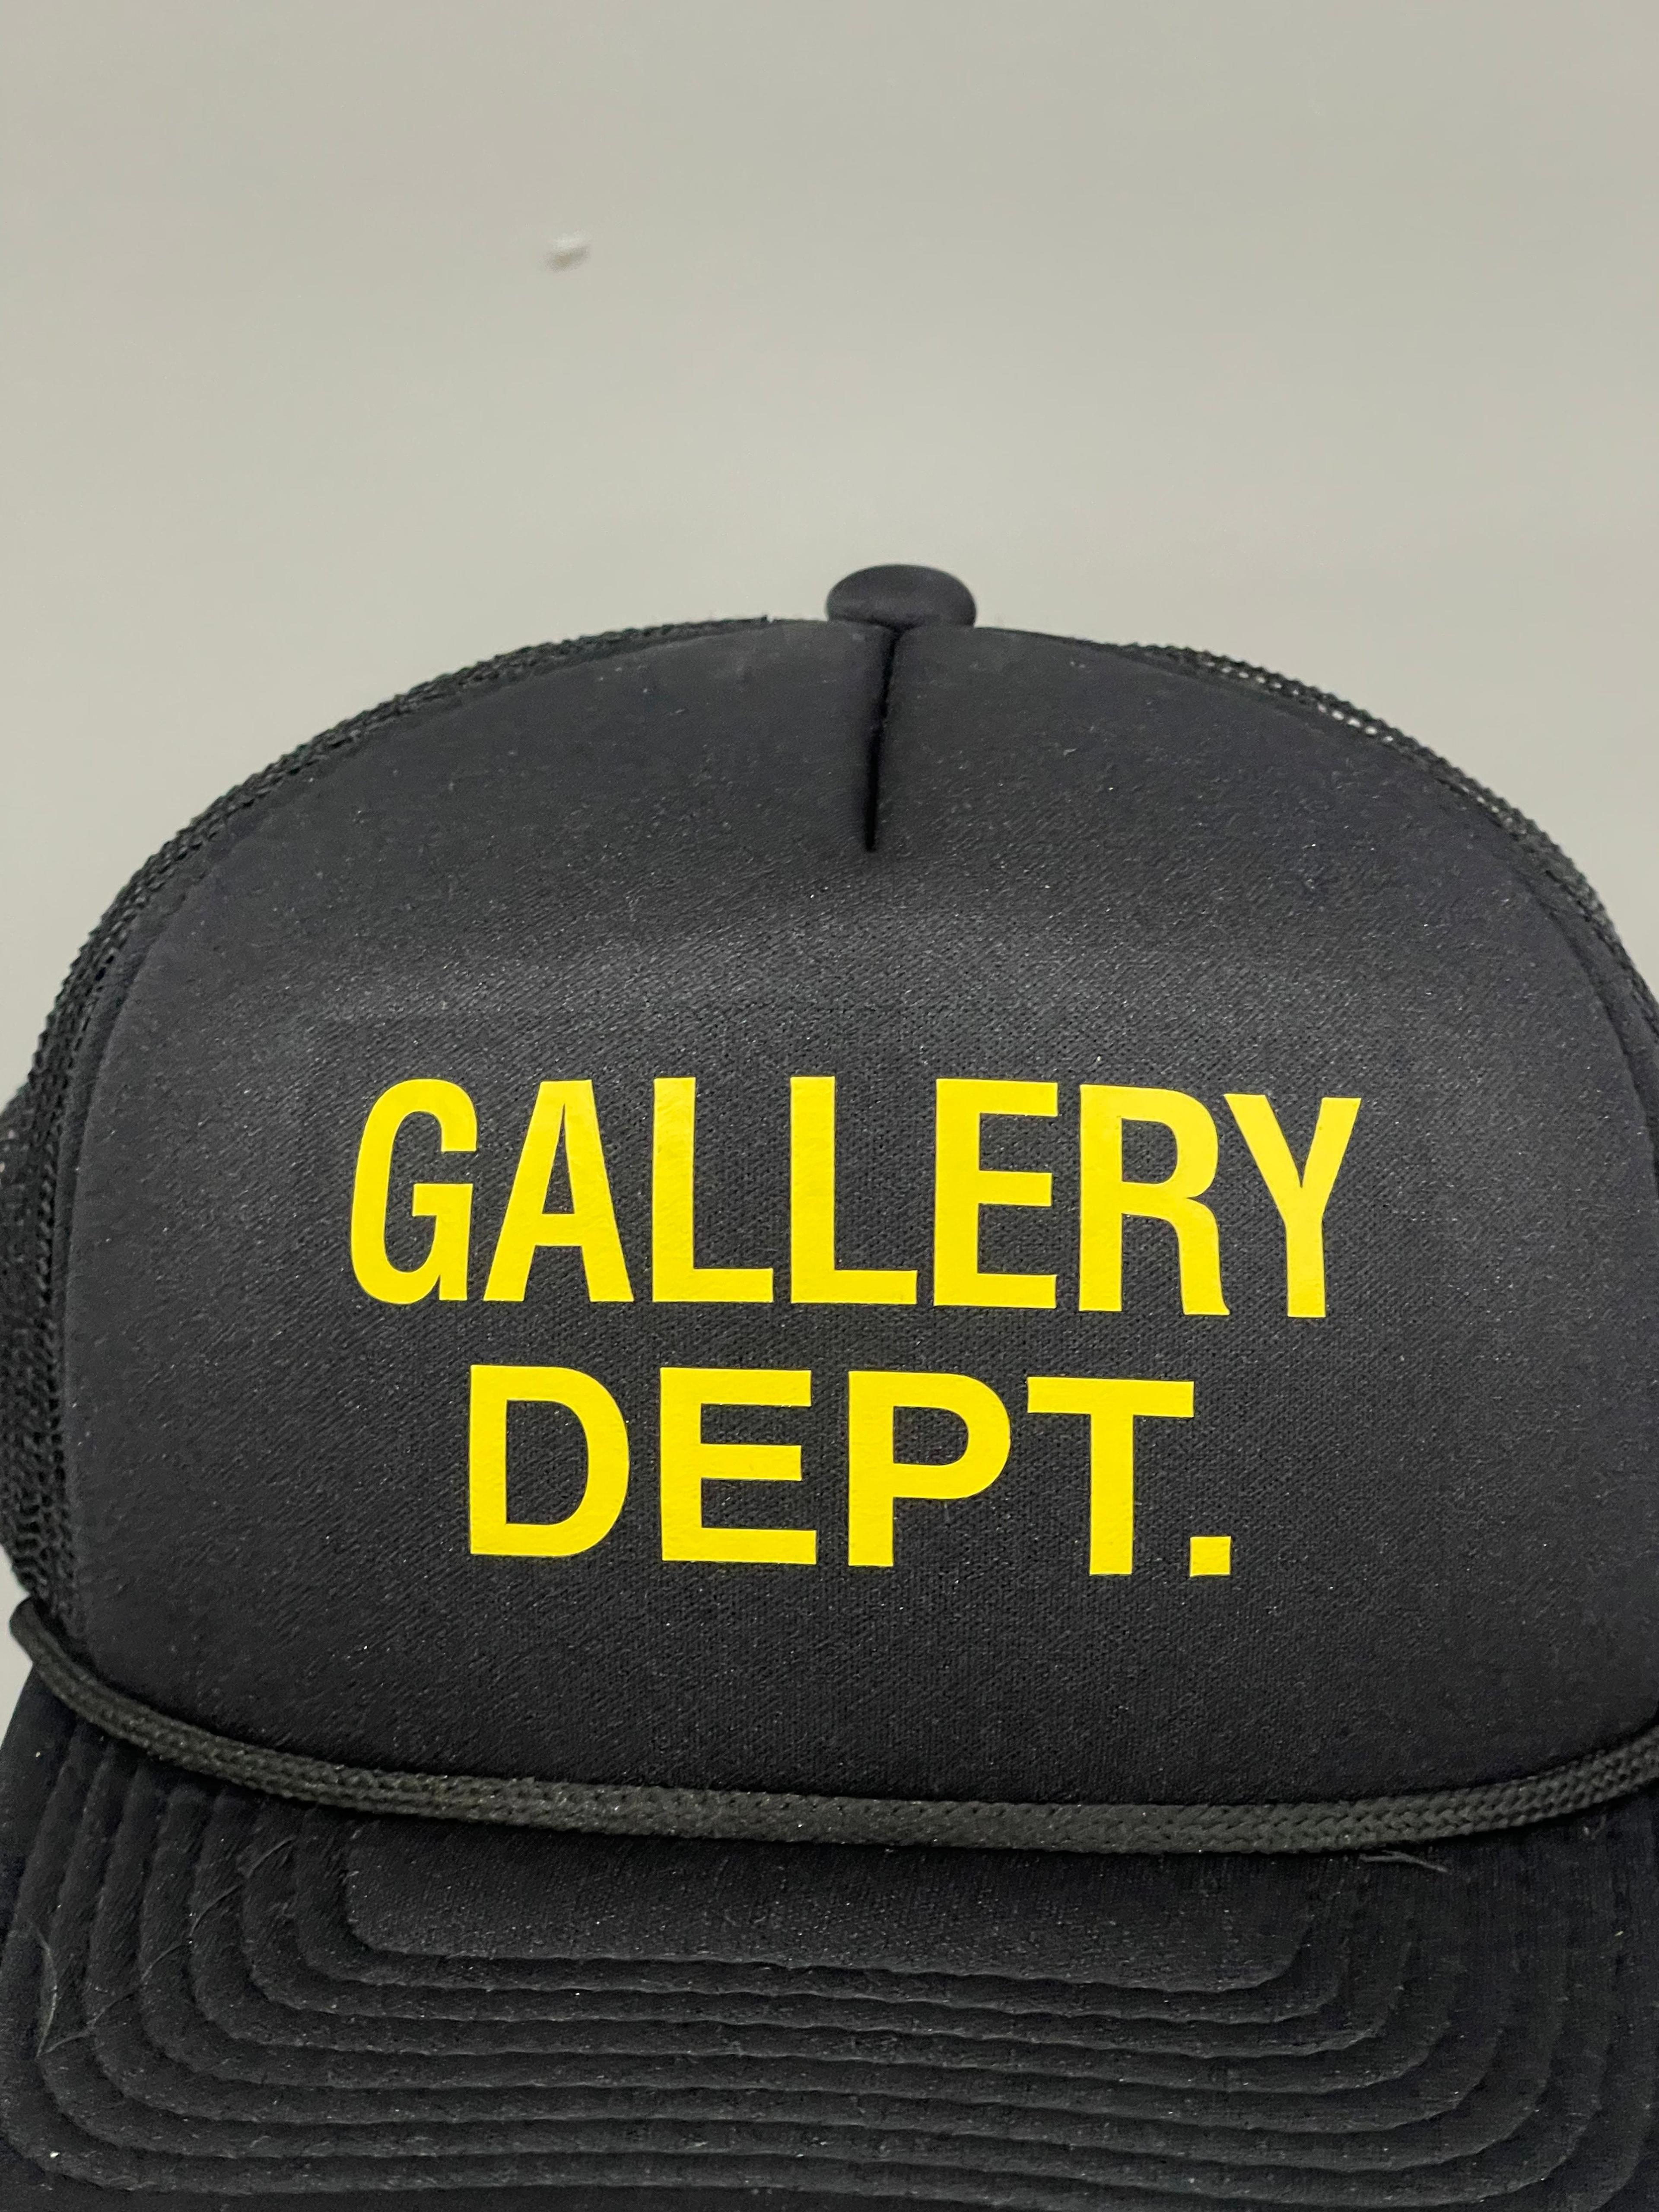 Alternate View 2 of Gallery Dept. Logo Trucker Hat Black